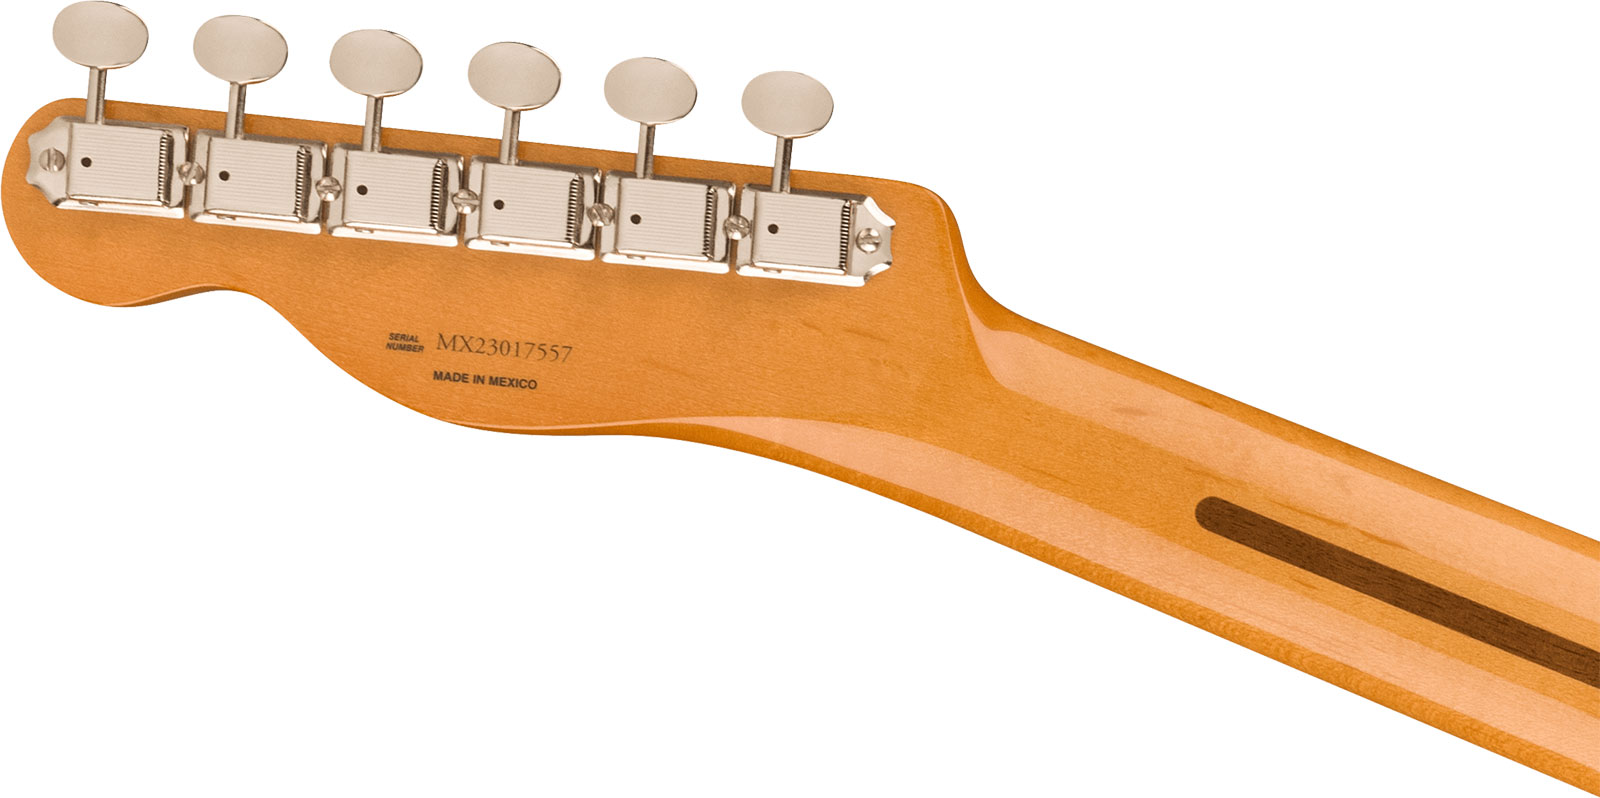 Fender Tele Nocaster 50s Vintera 2 Mex 2s Ht Mn - 2-color Sunburst - Guitarra eléctrica con forma de tel - Variation 3